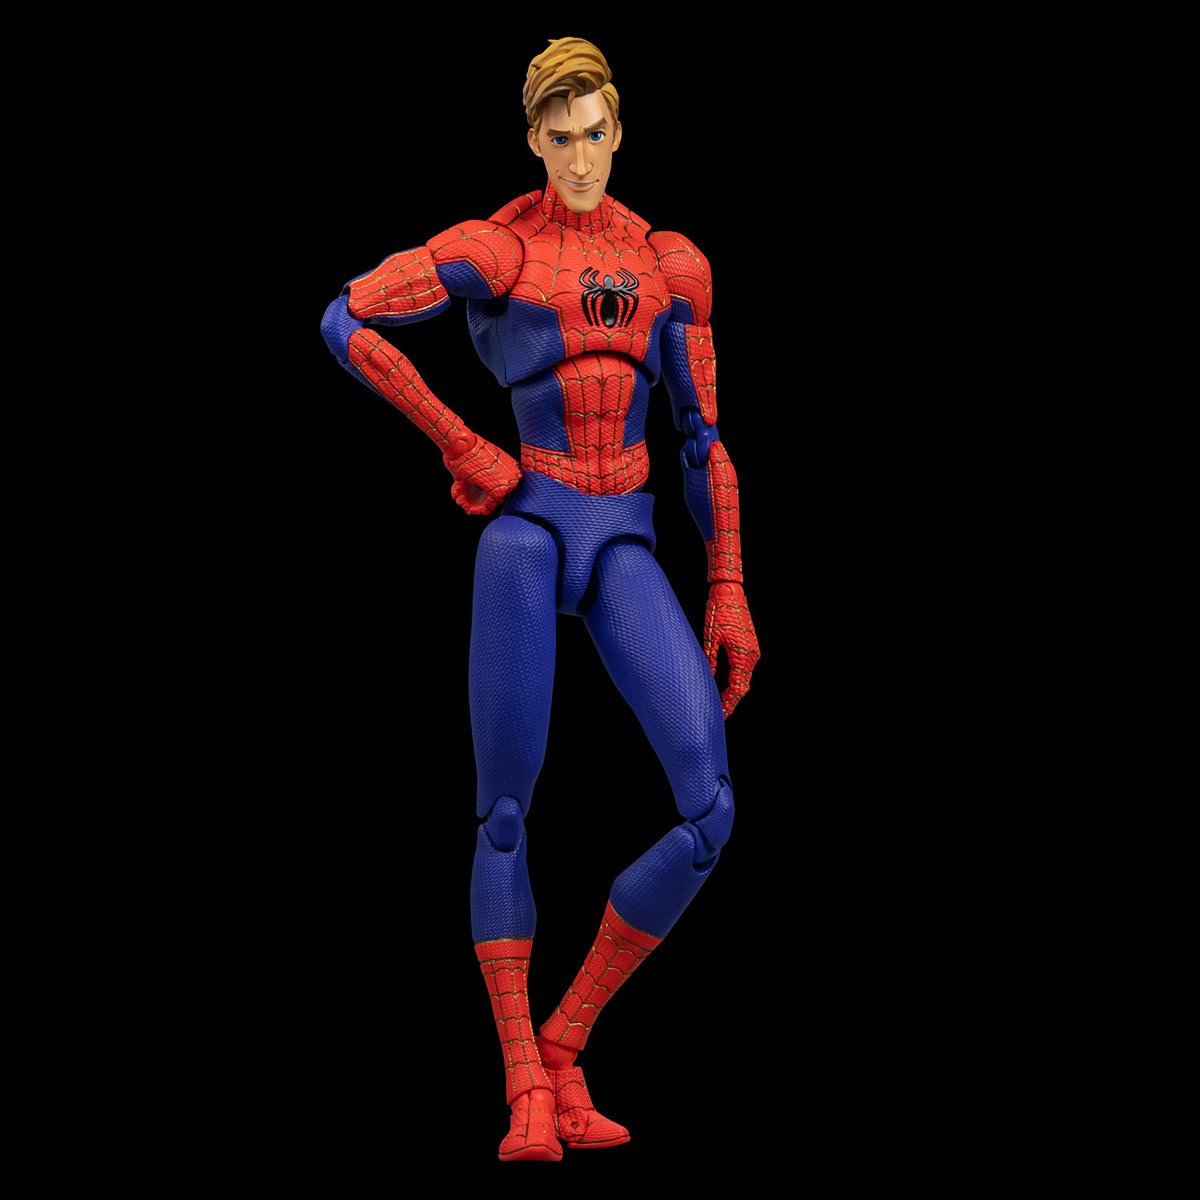 Marvel SpiderMan Peter B. Parker Special Version SVAction Action Figure